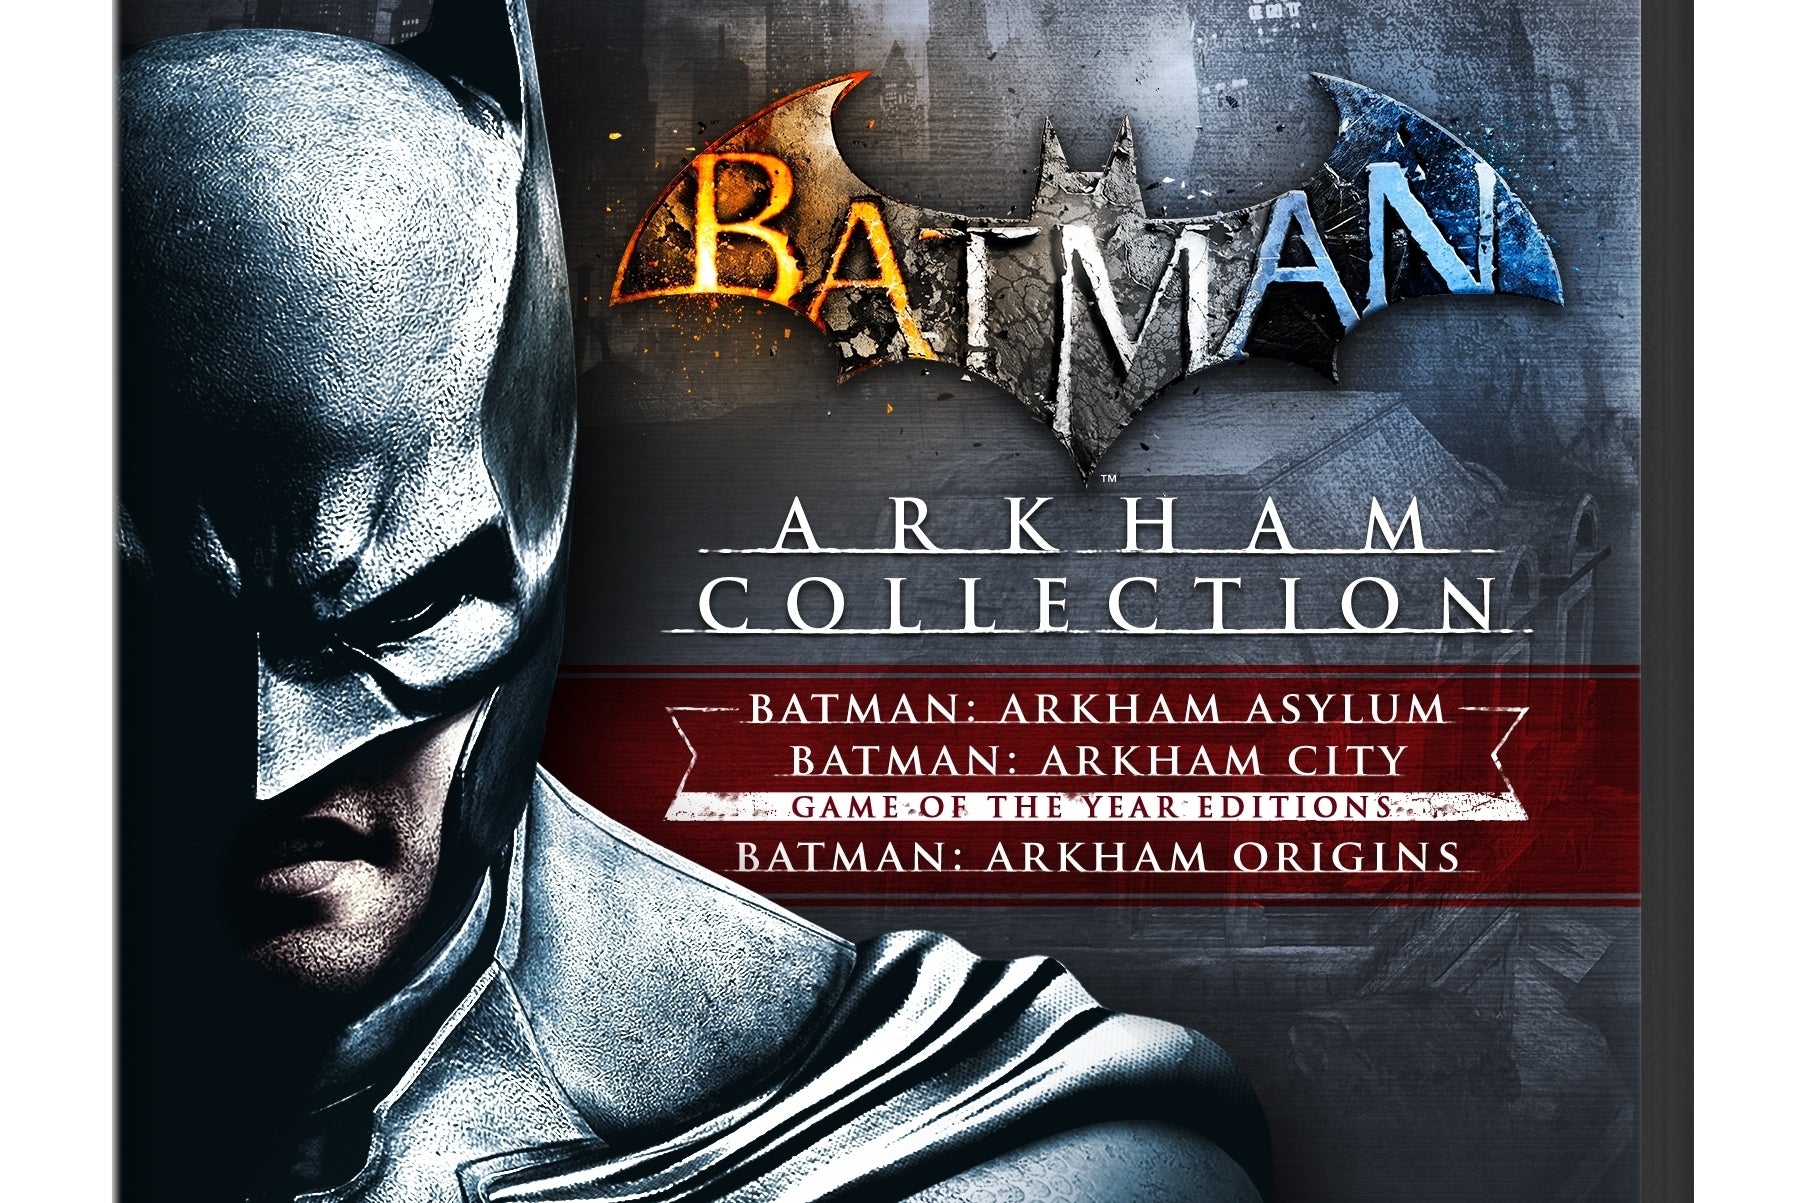 Imagem para Batman Arkham Collection disponível a 22 de novembro